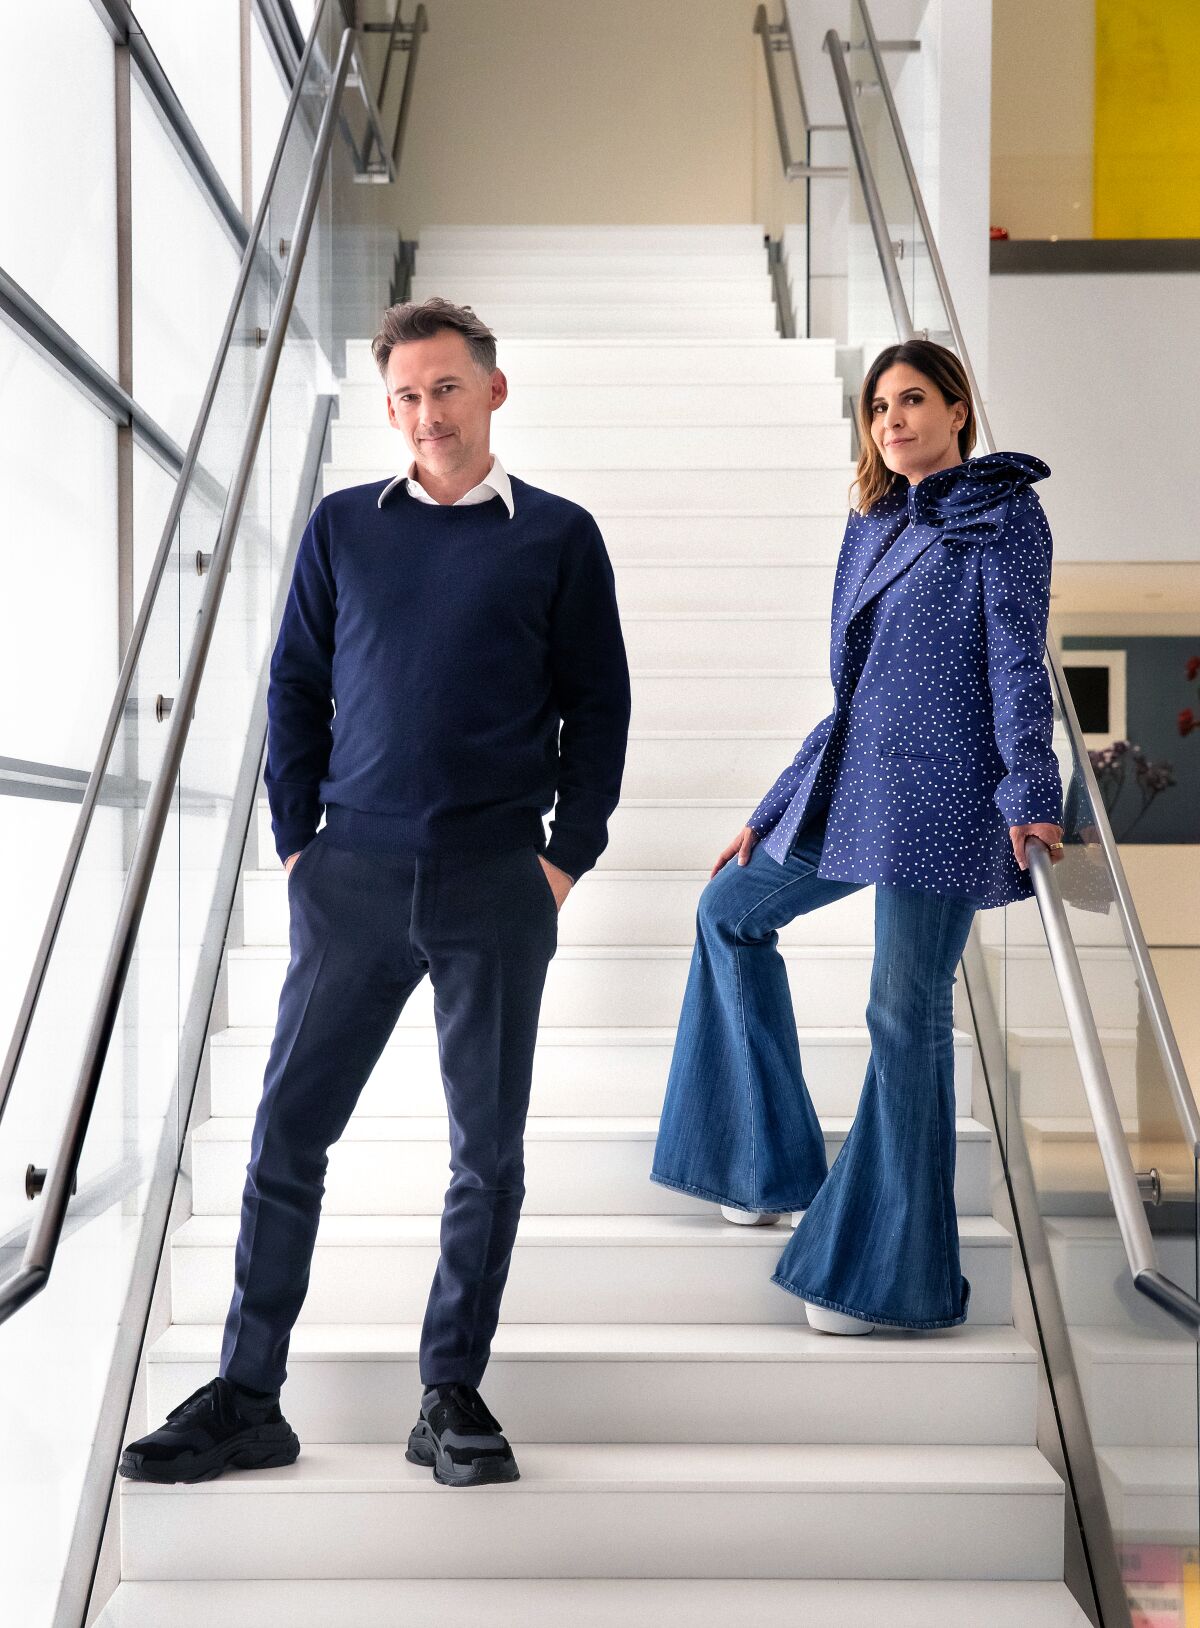 Joel Lubin and Maha Dakhil pose on a stairwell